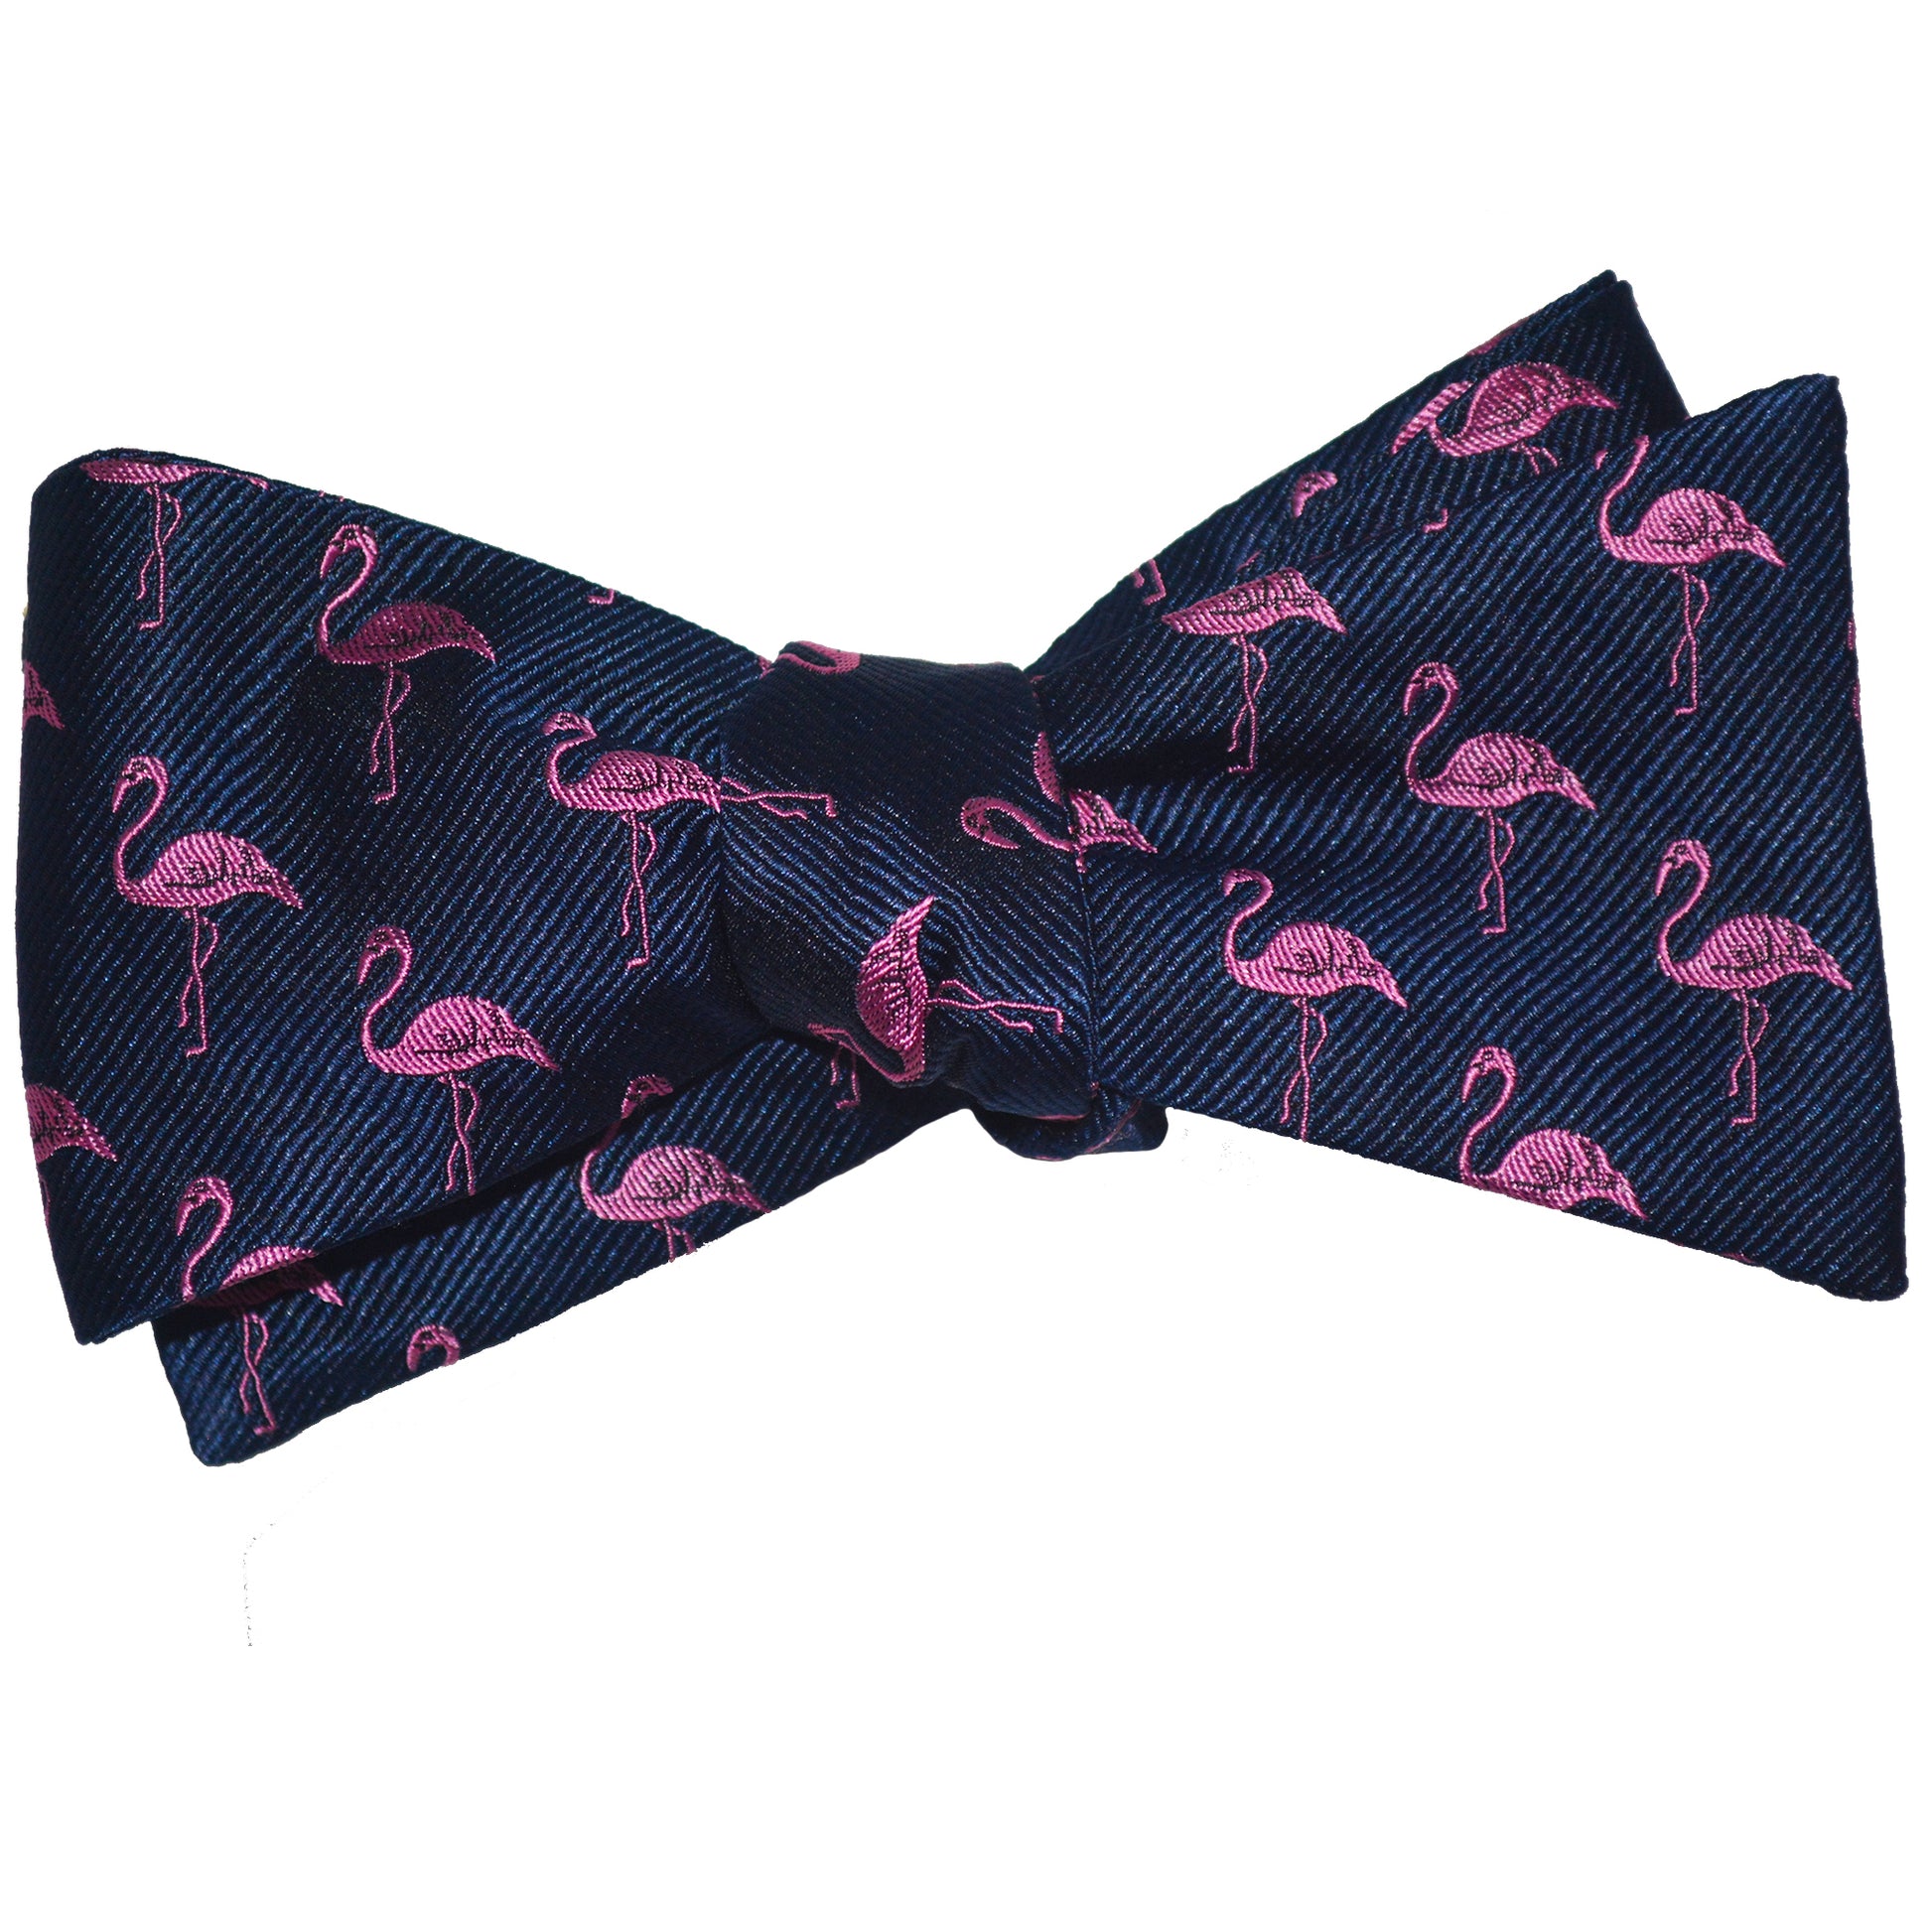 Flamingo Bow Tie - Pink on Navy, Woven Silk - SummerTies